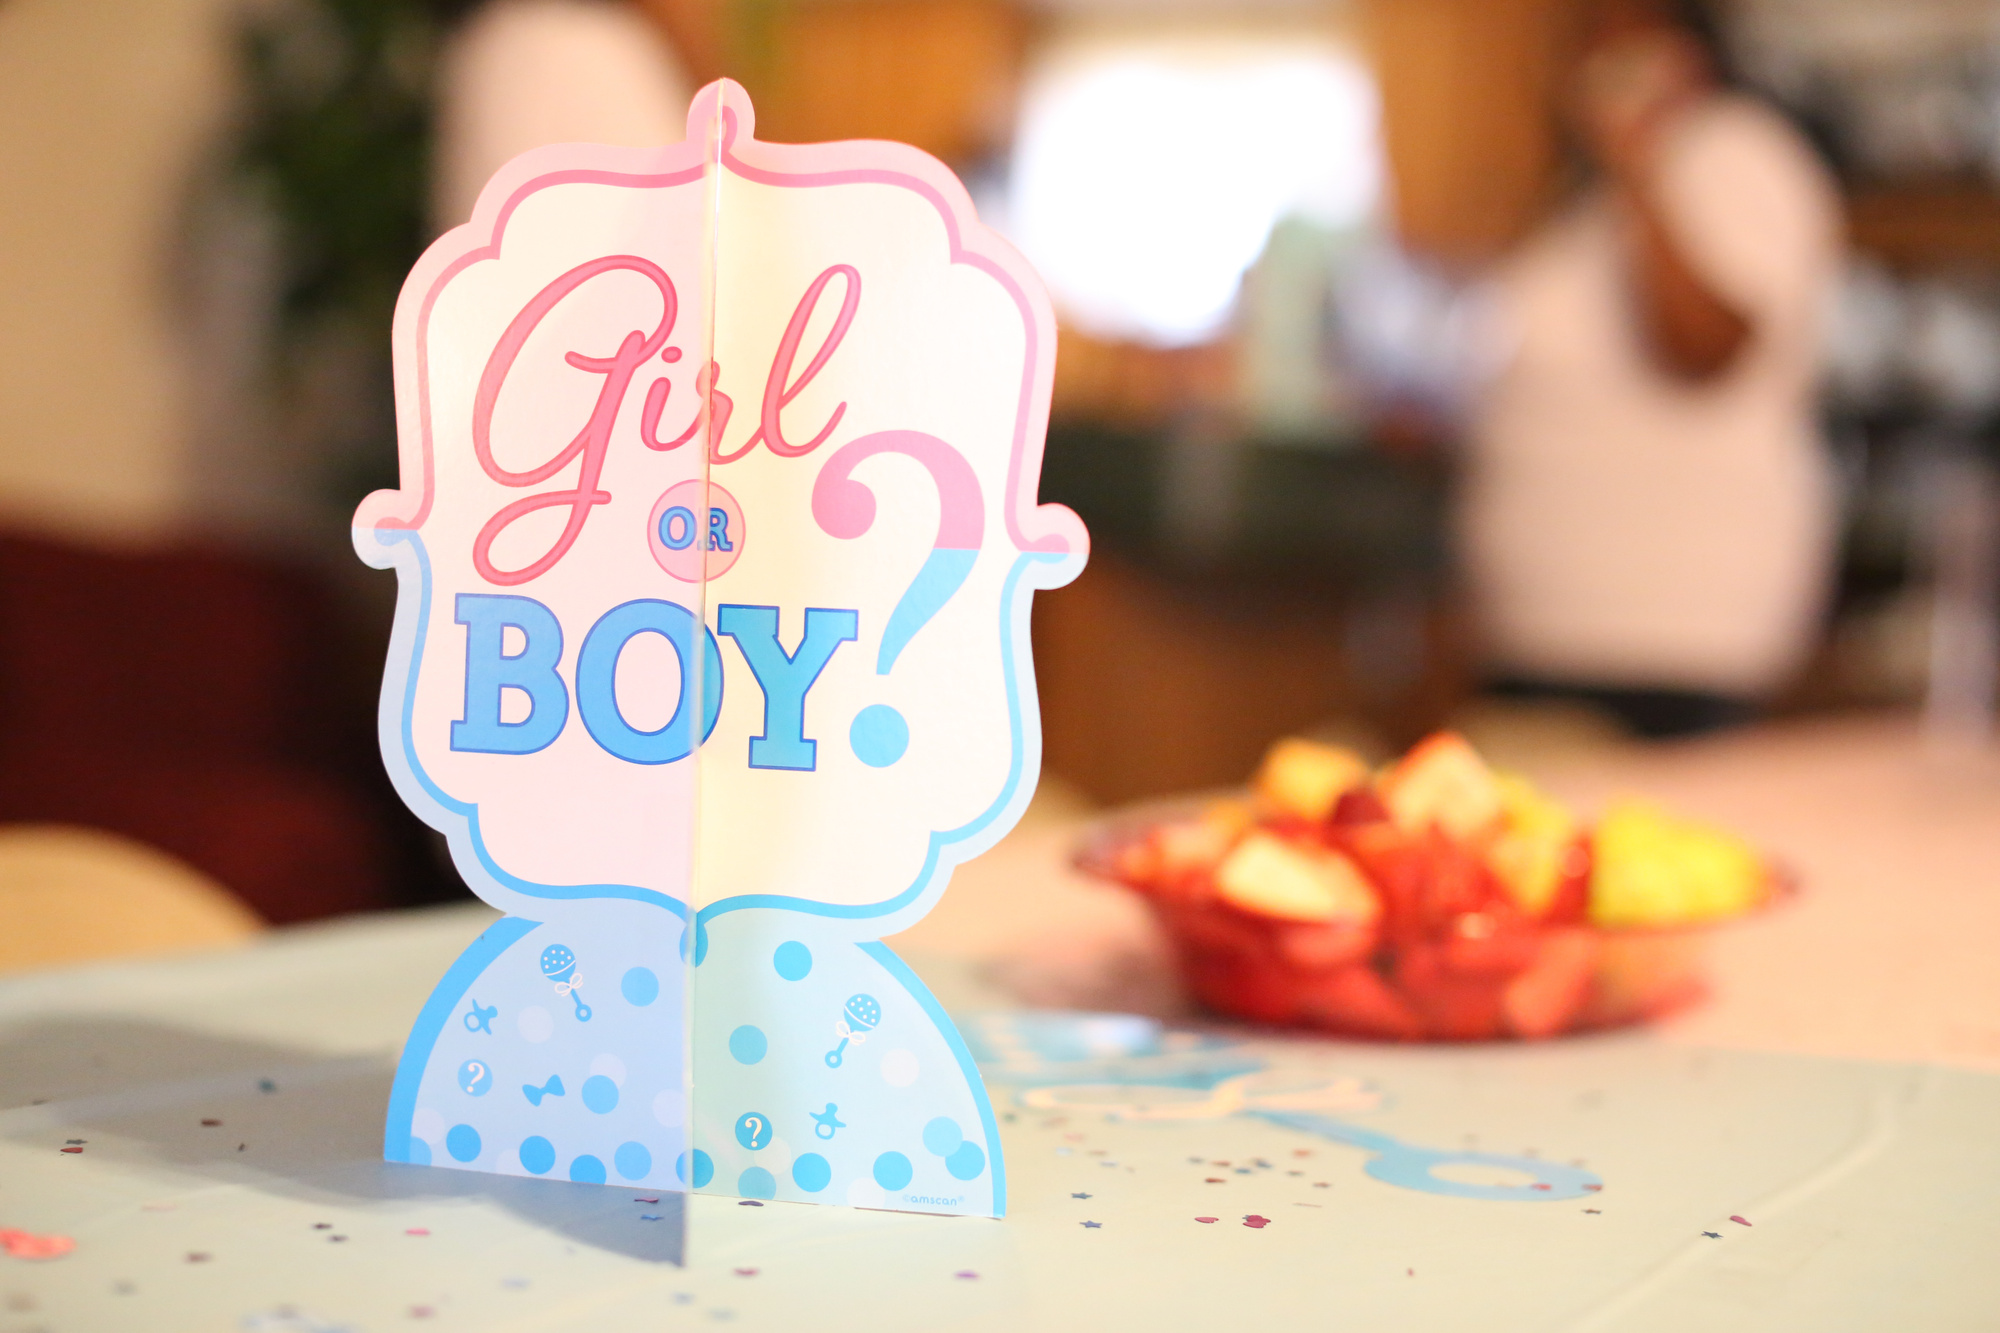 girl or boy gender sign on table